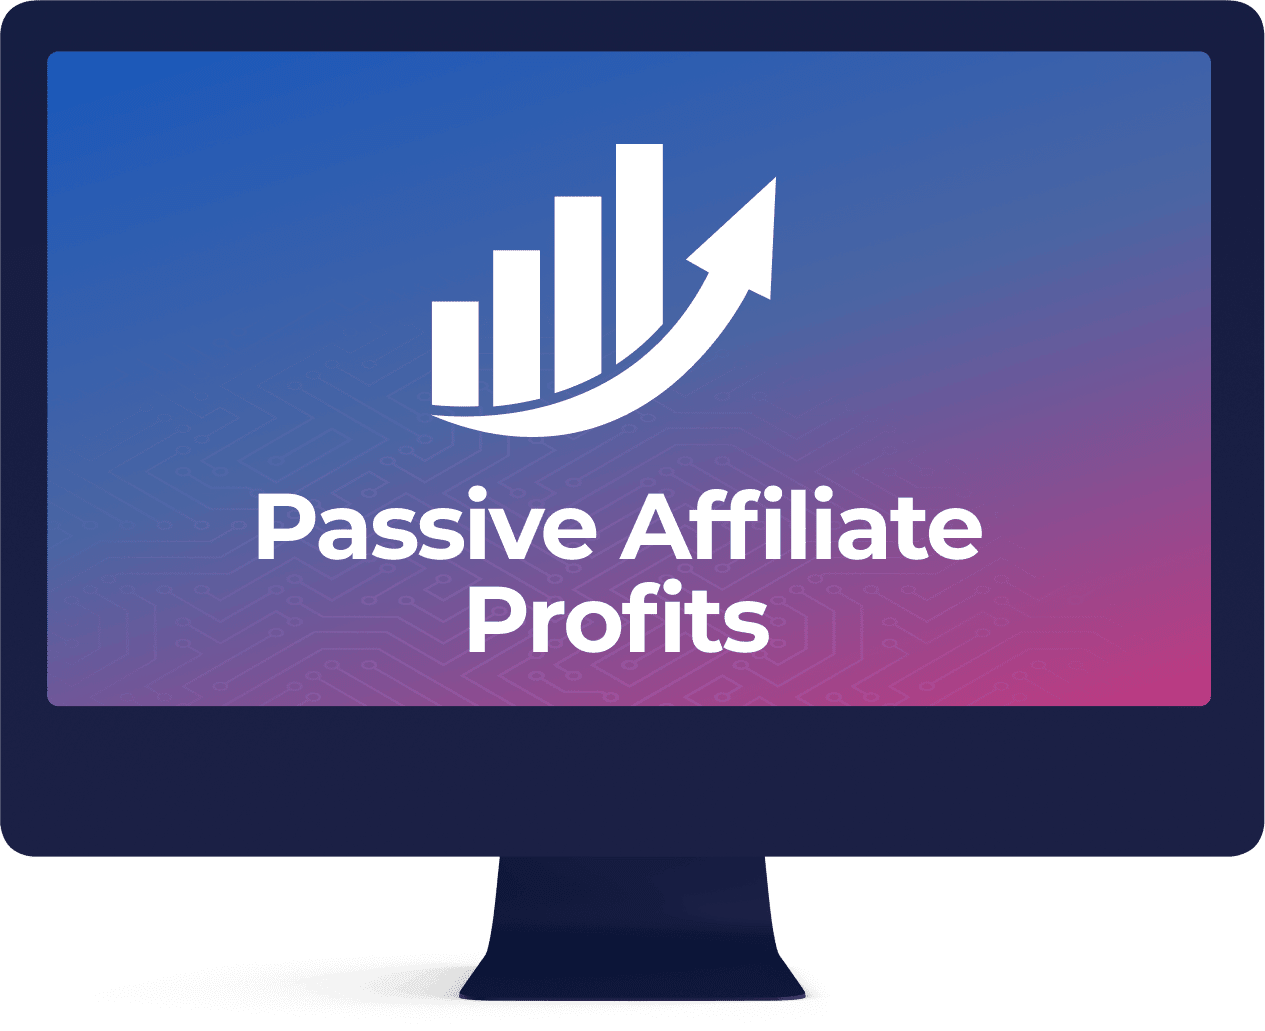 passive affiliate profits